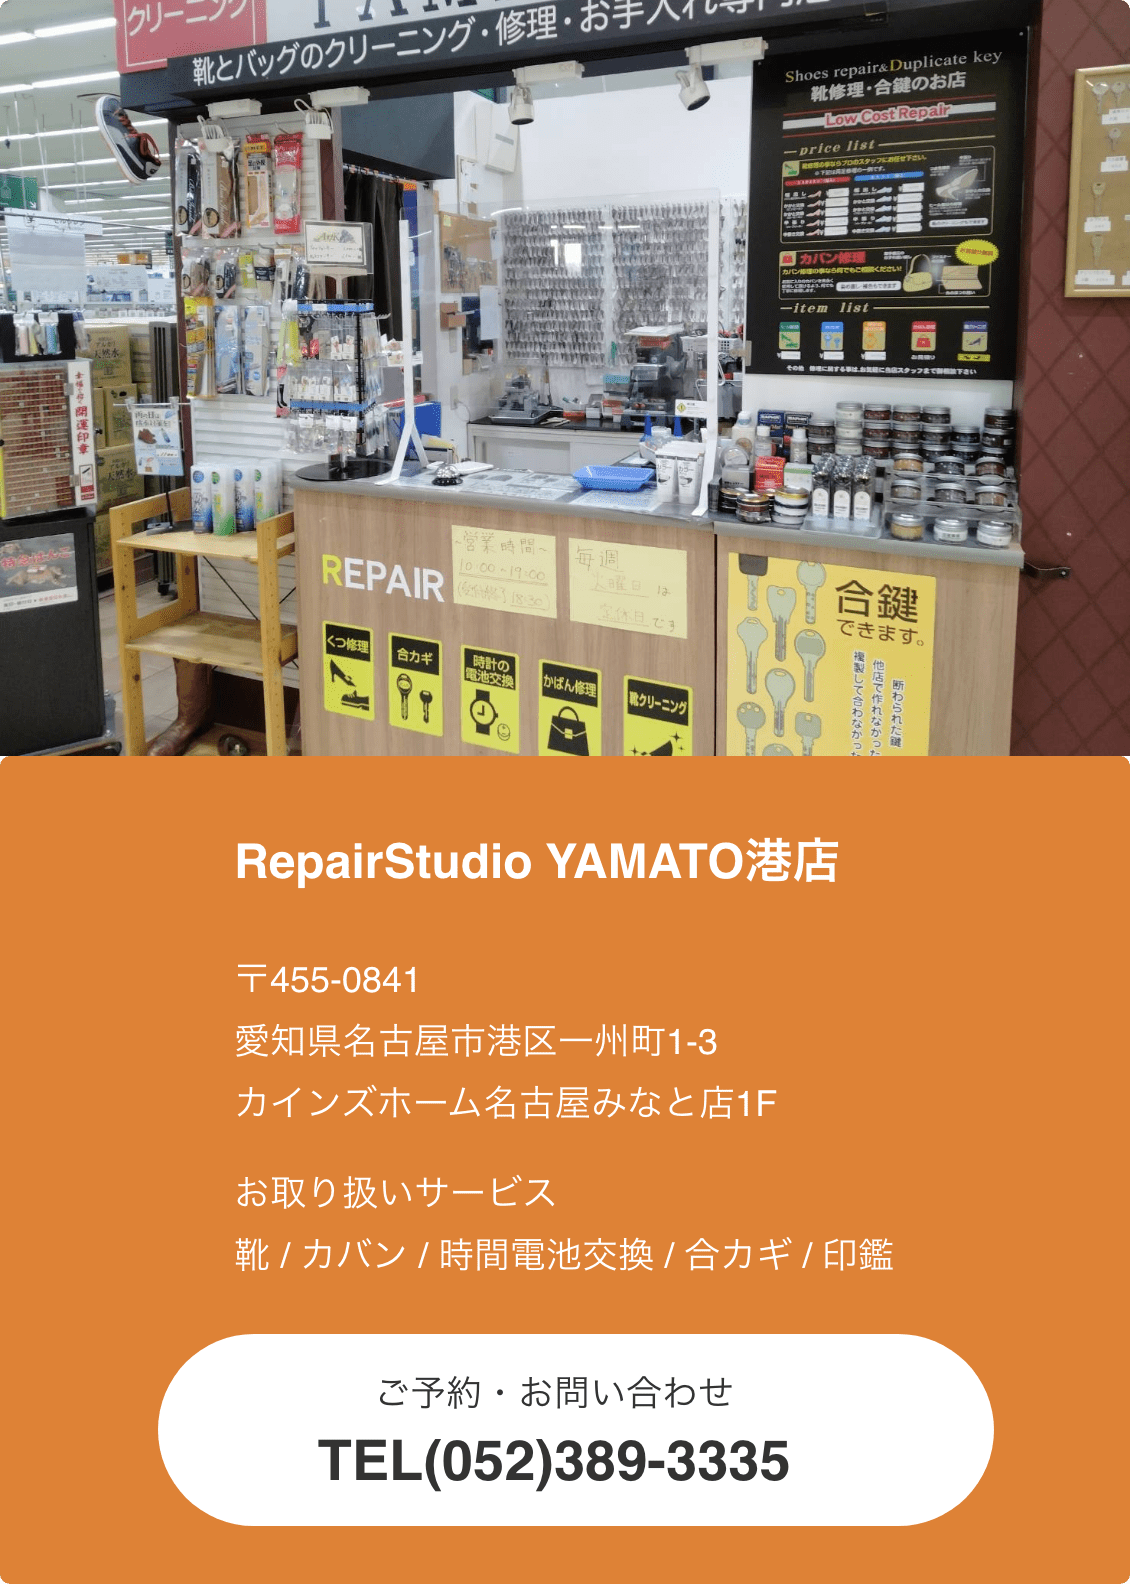 RepairStudio YAMATO港店:ご予約・お問い合わせ TEL052-389-3335